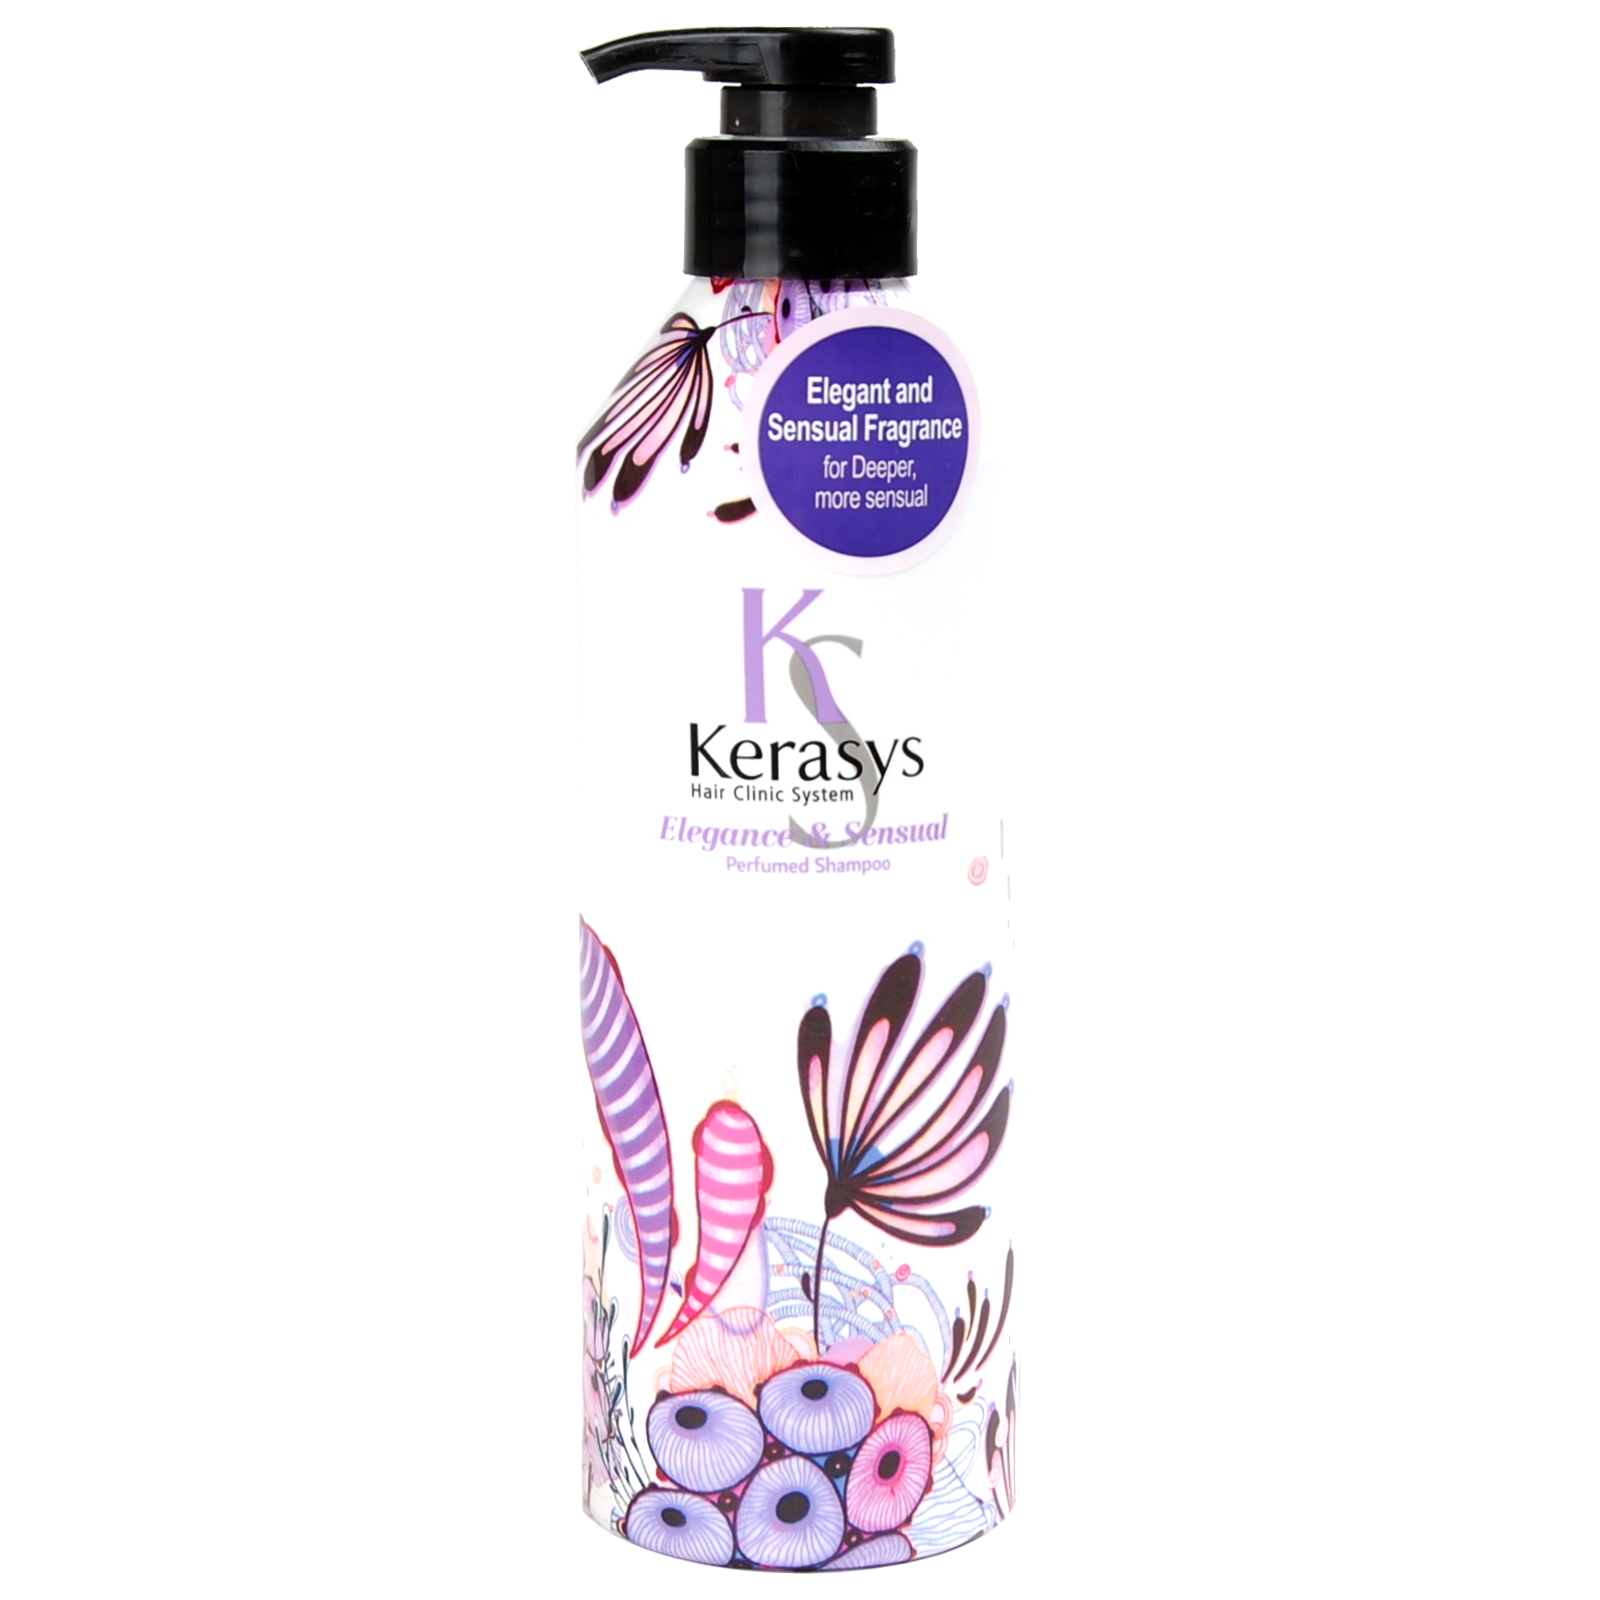 kerasys elegance&sensual shampoo szampon kerasys perfume opinie